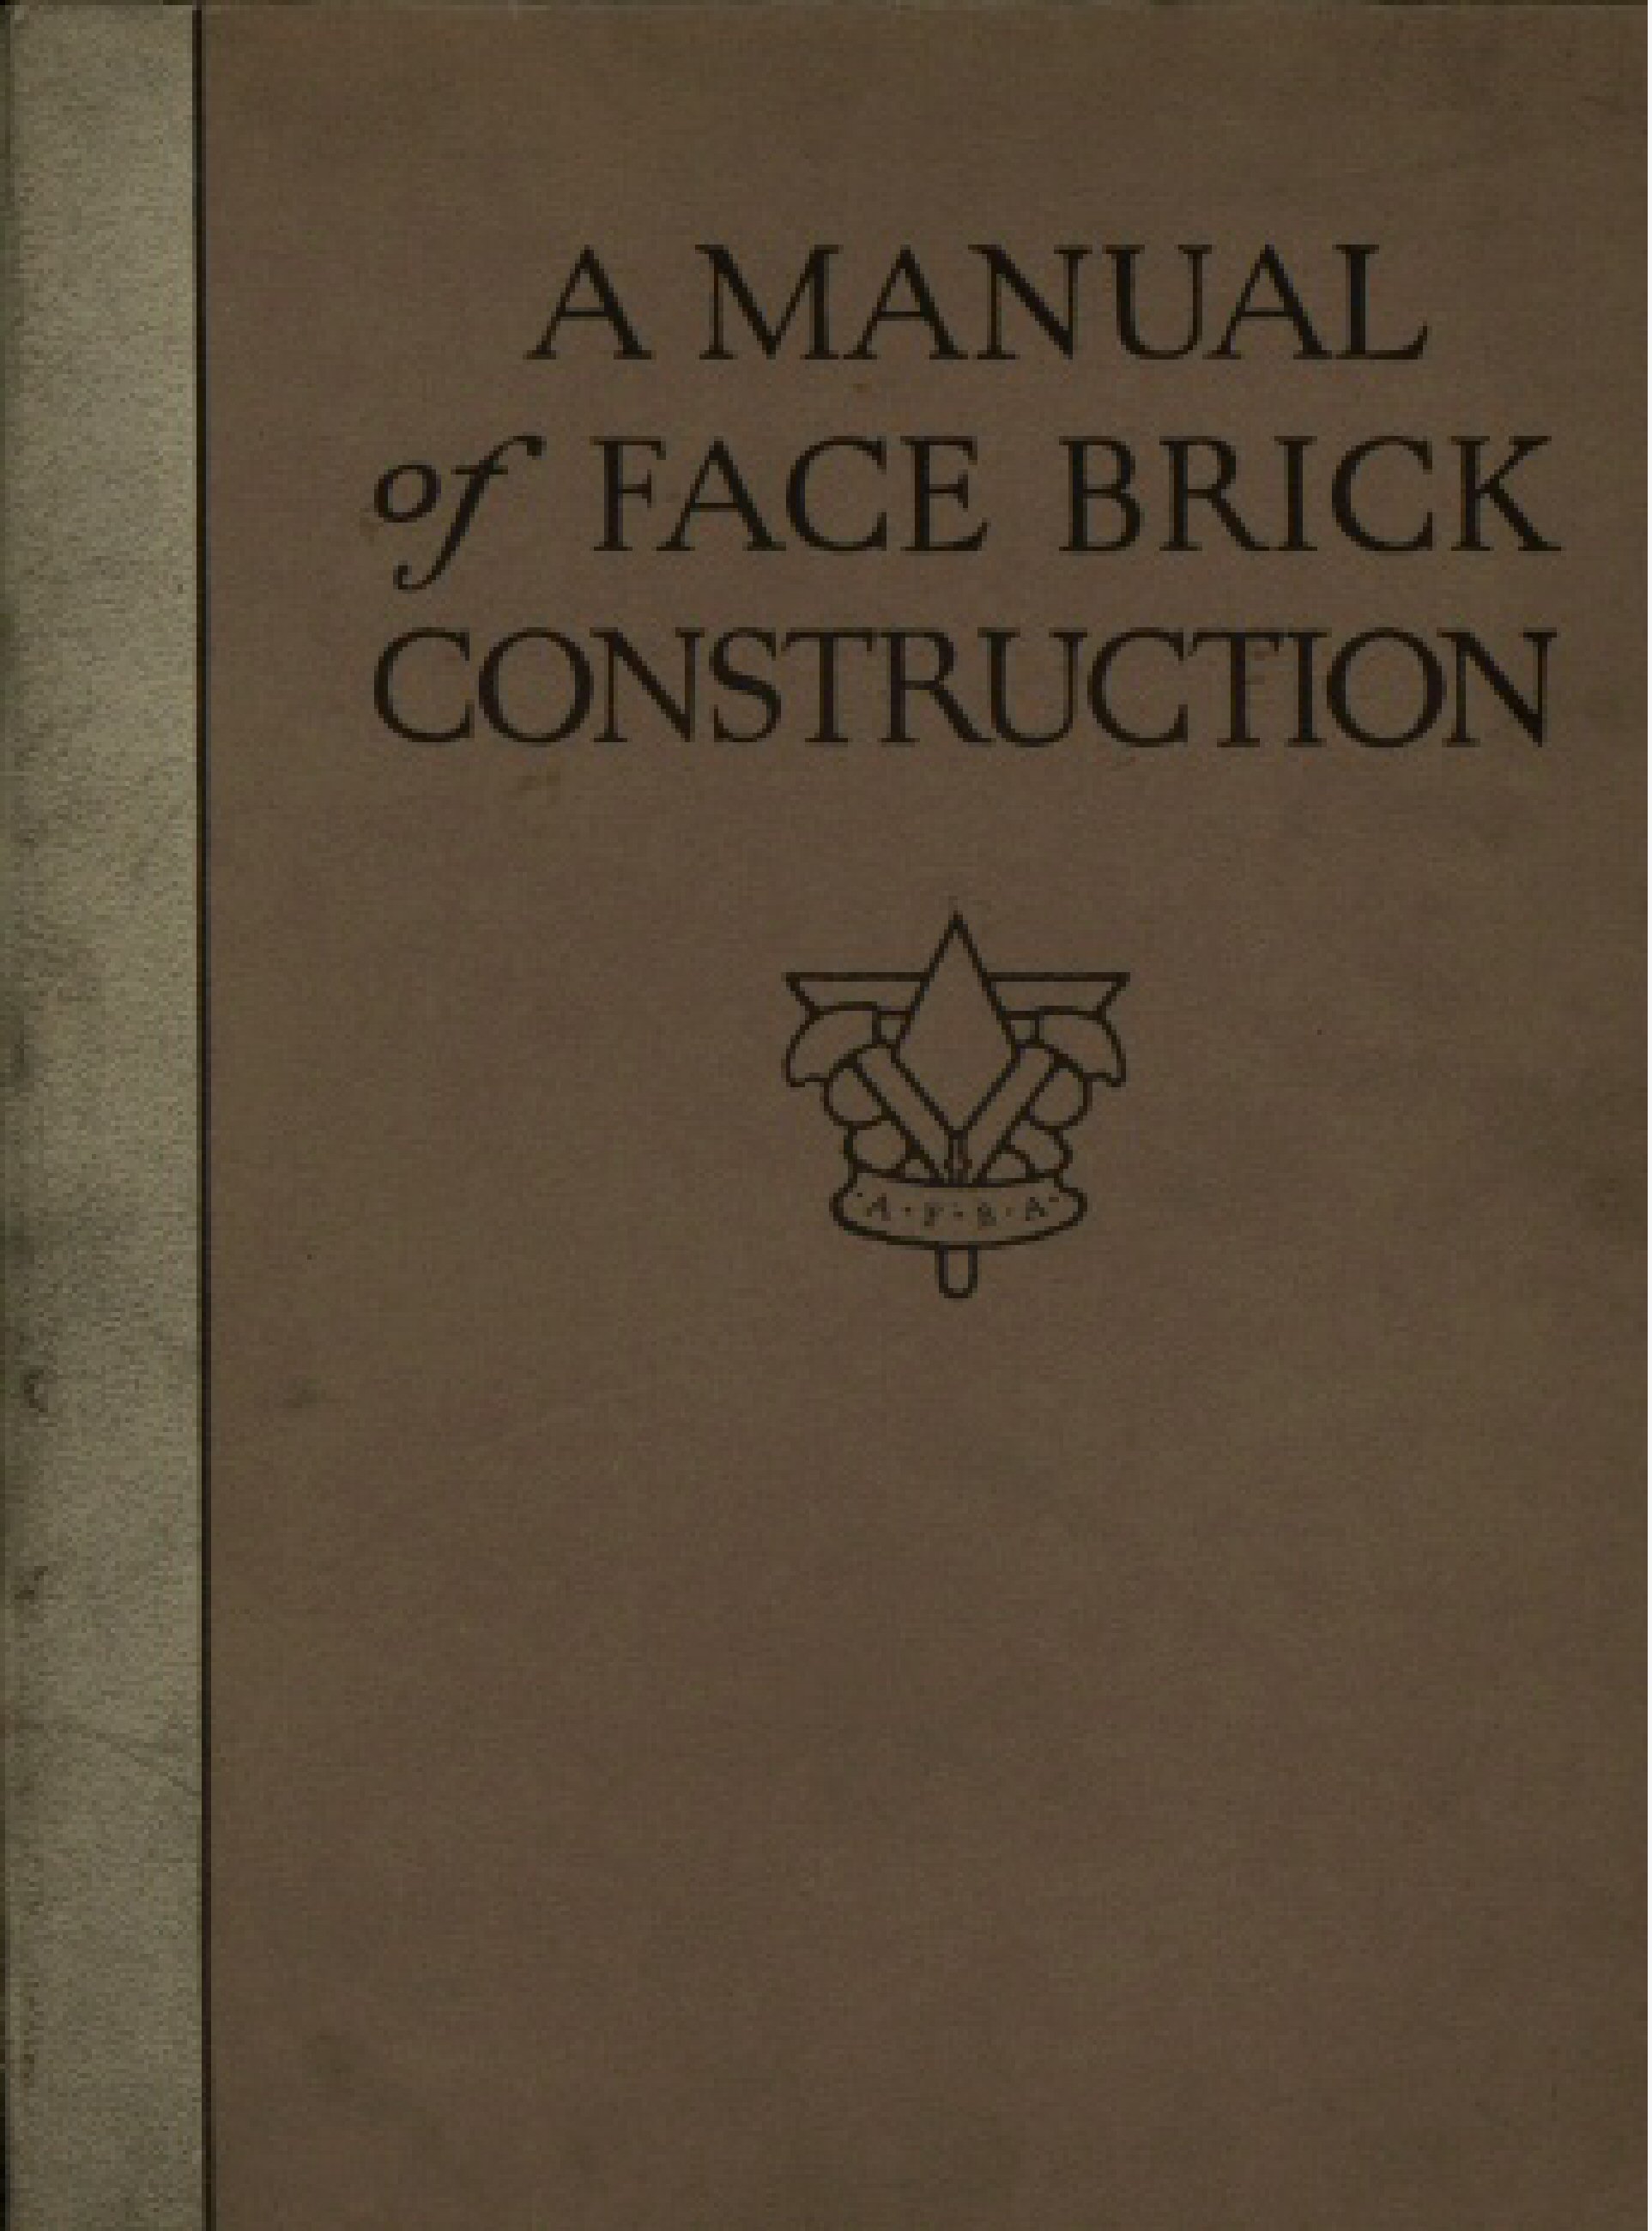 A manual of face brick construction